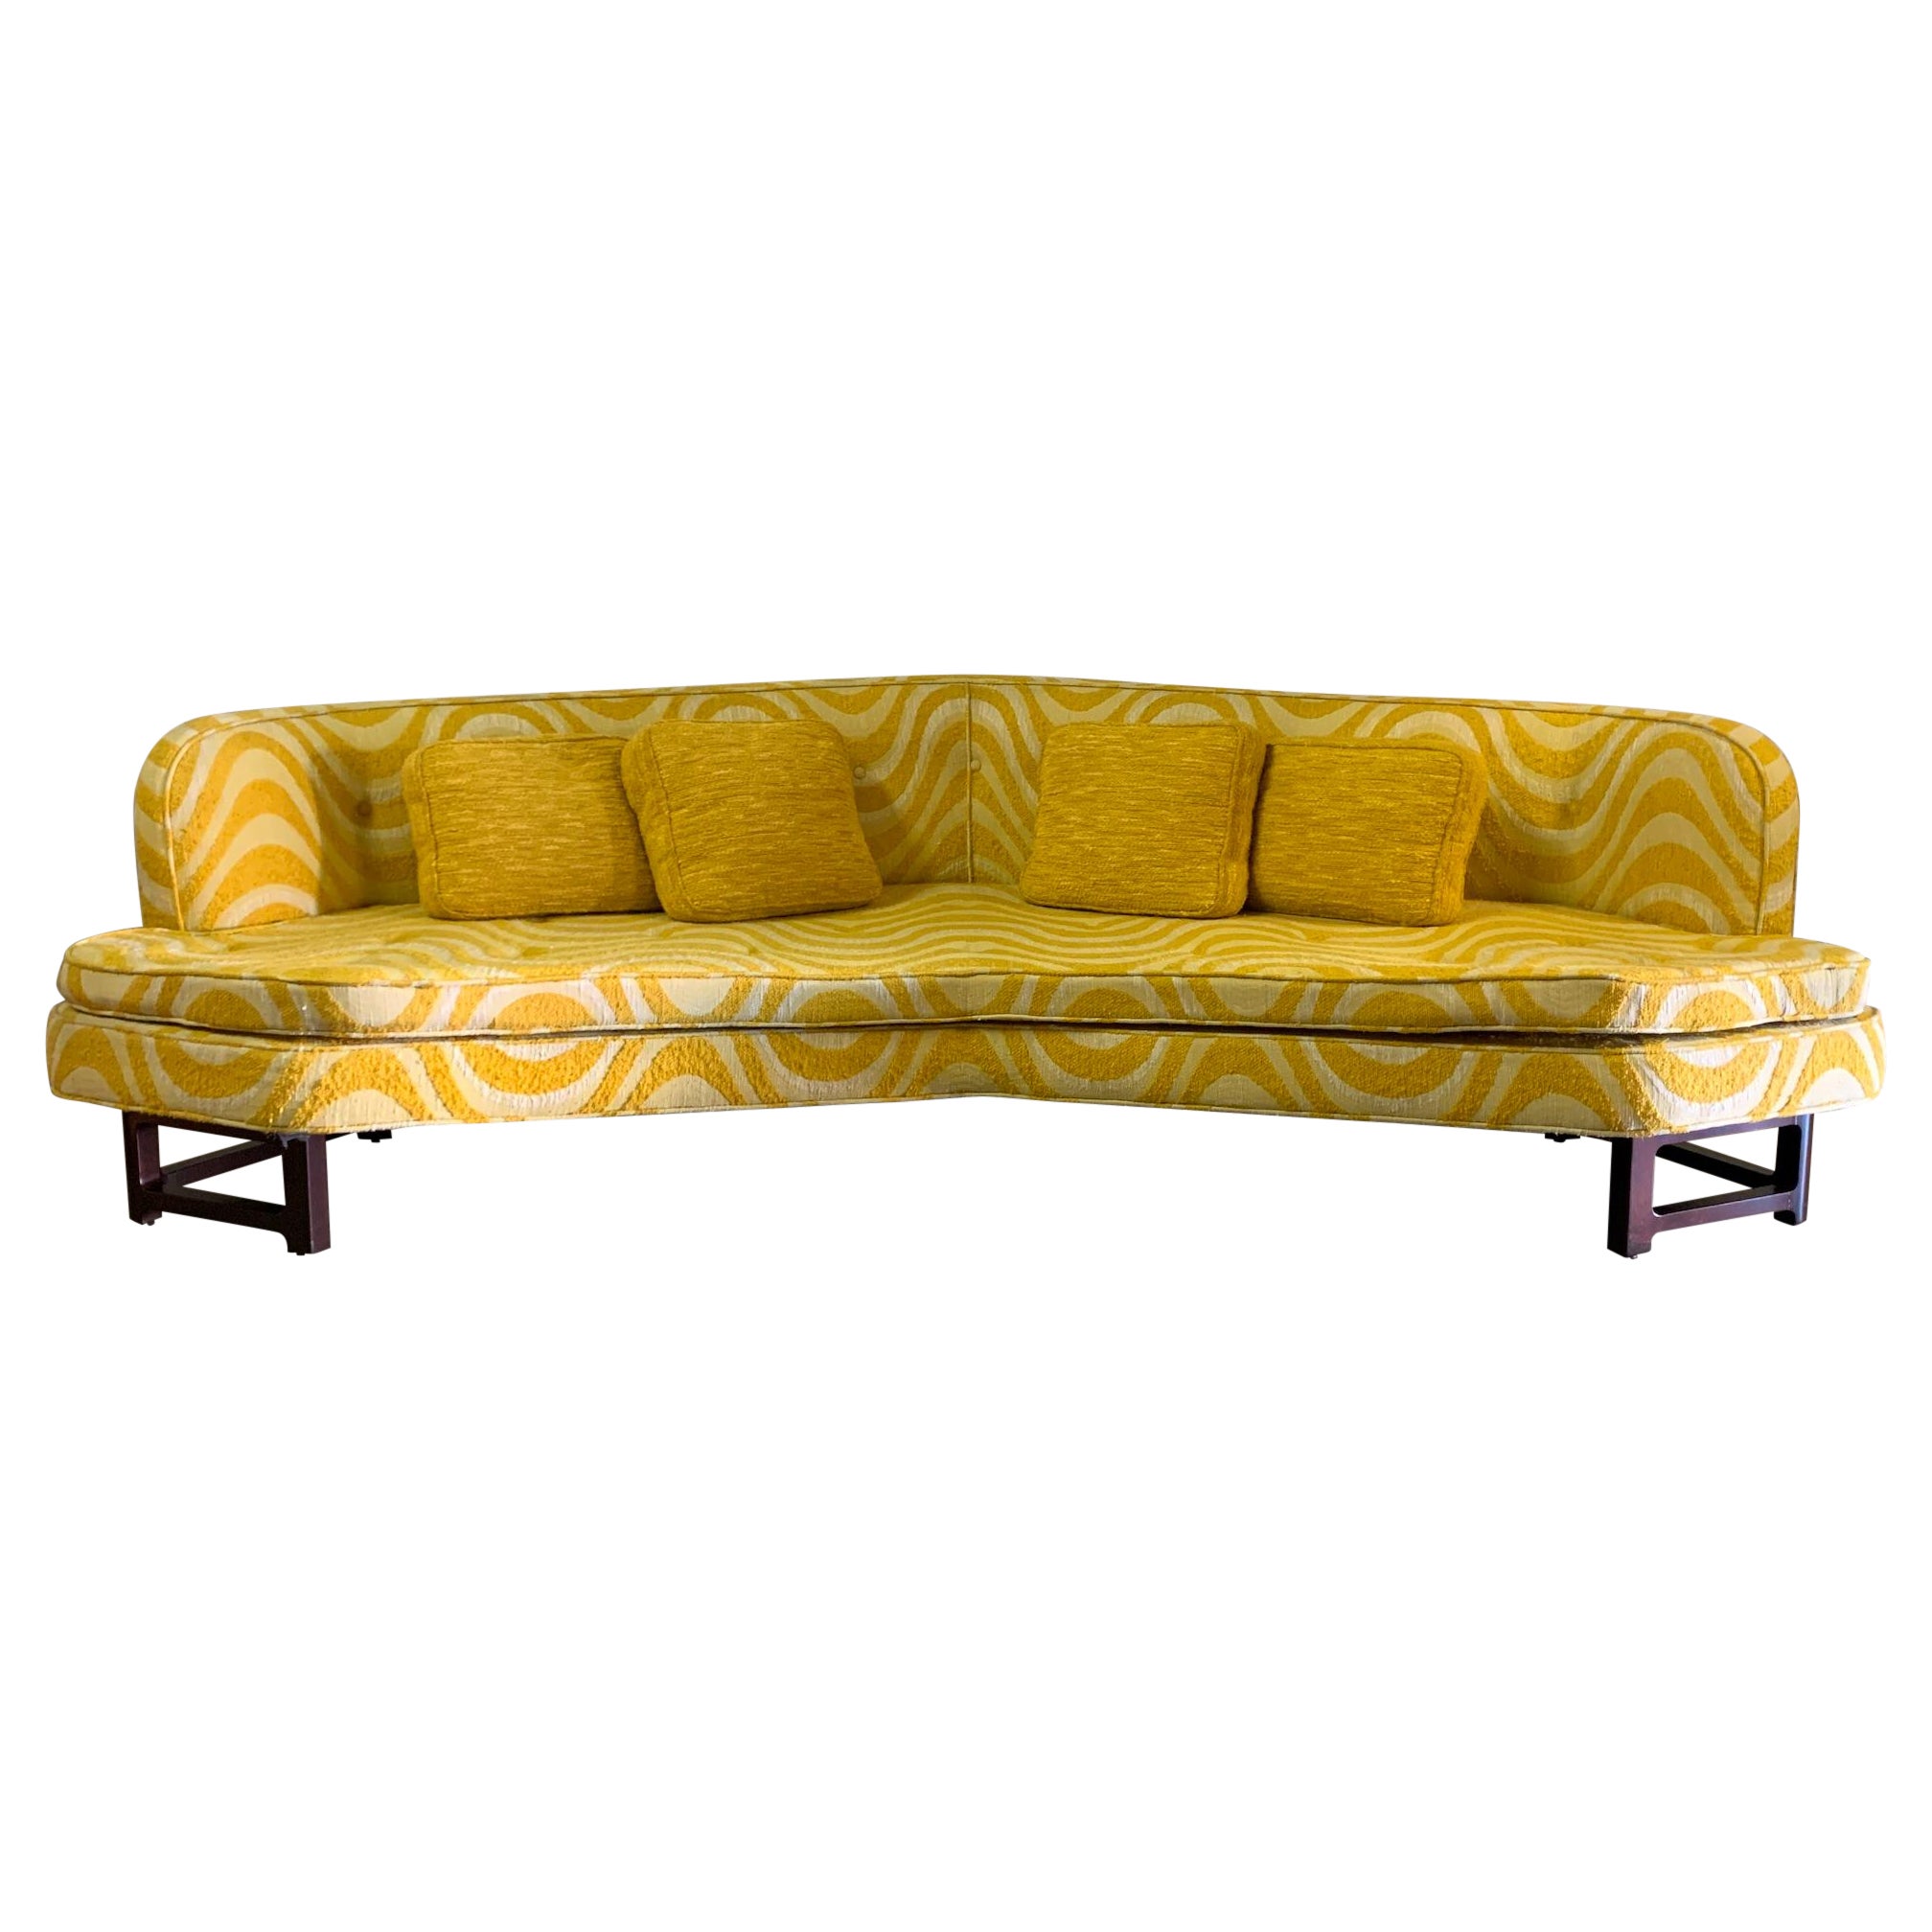 Edward Wormley for Dunbar Model 6329A Large Angled Sofa